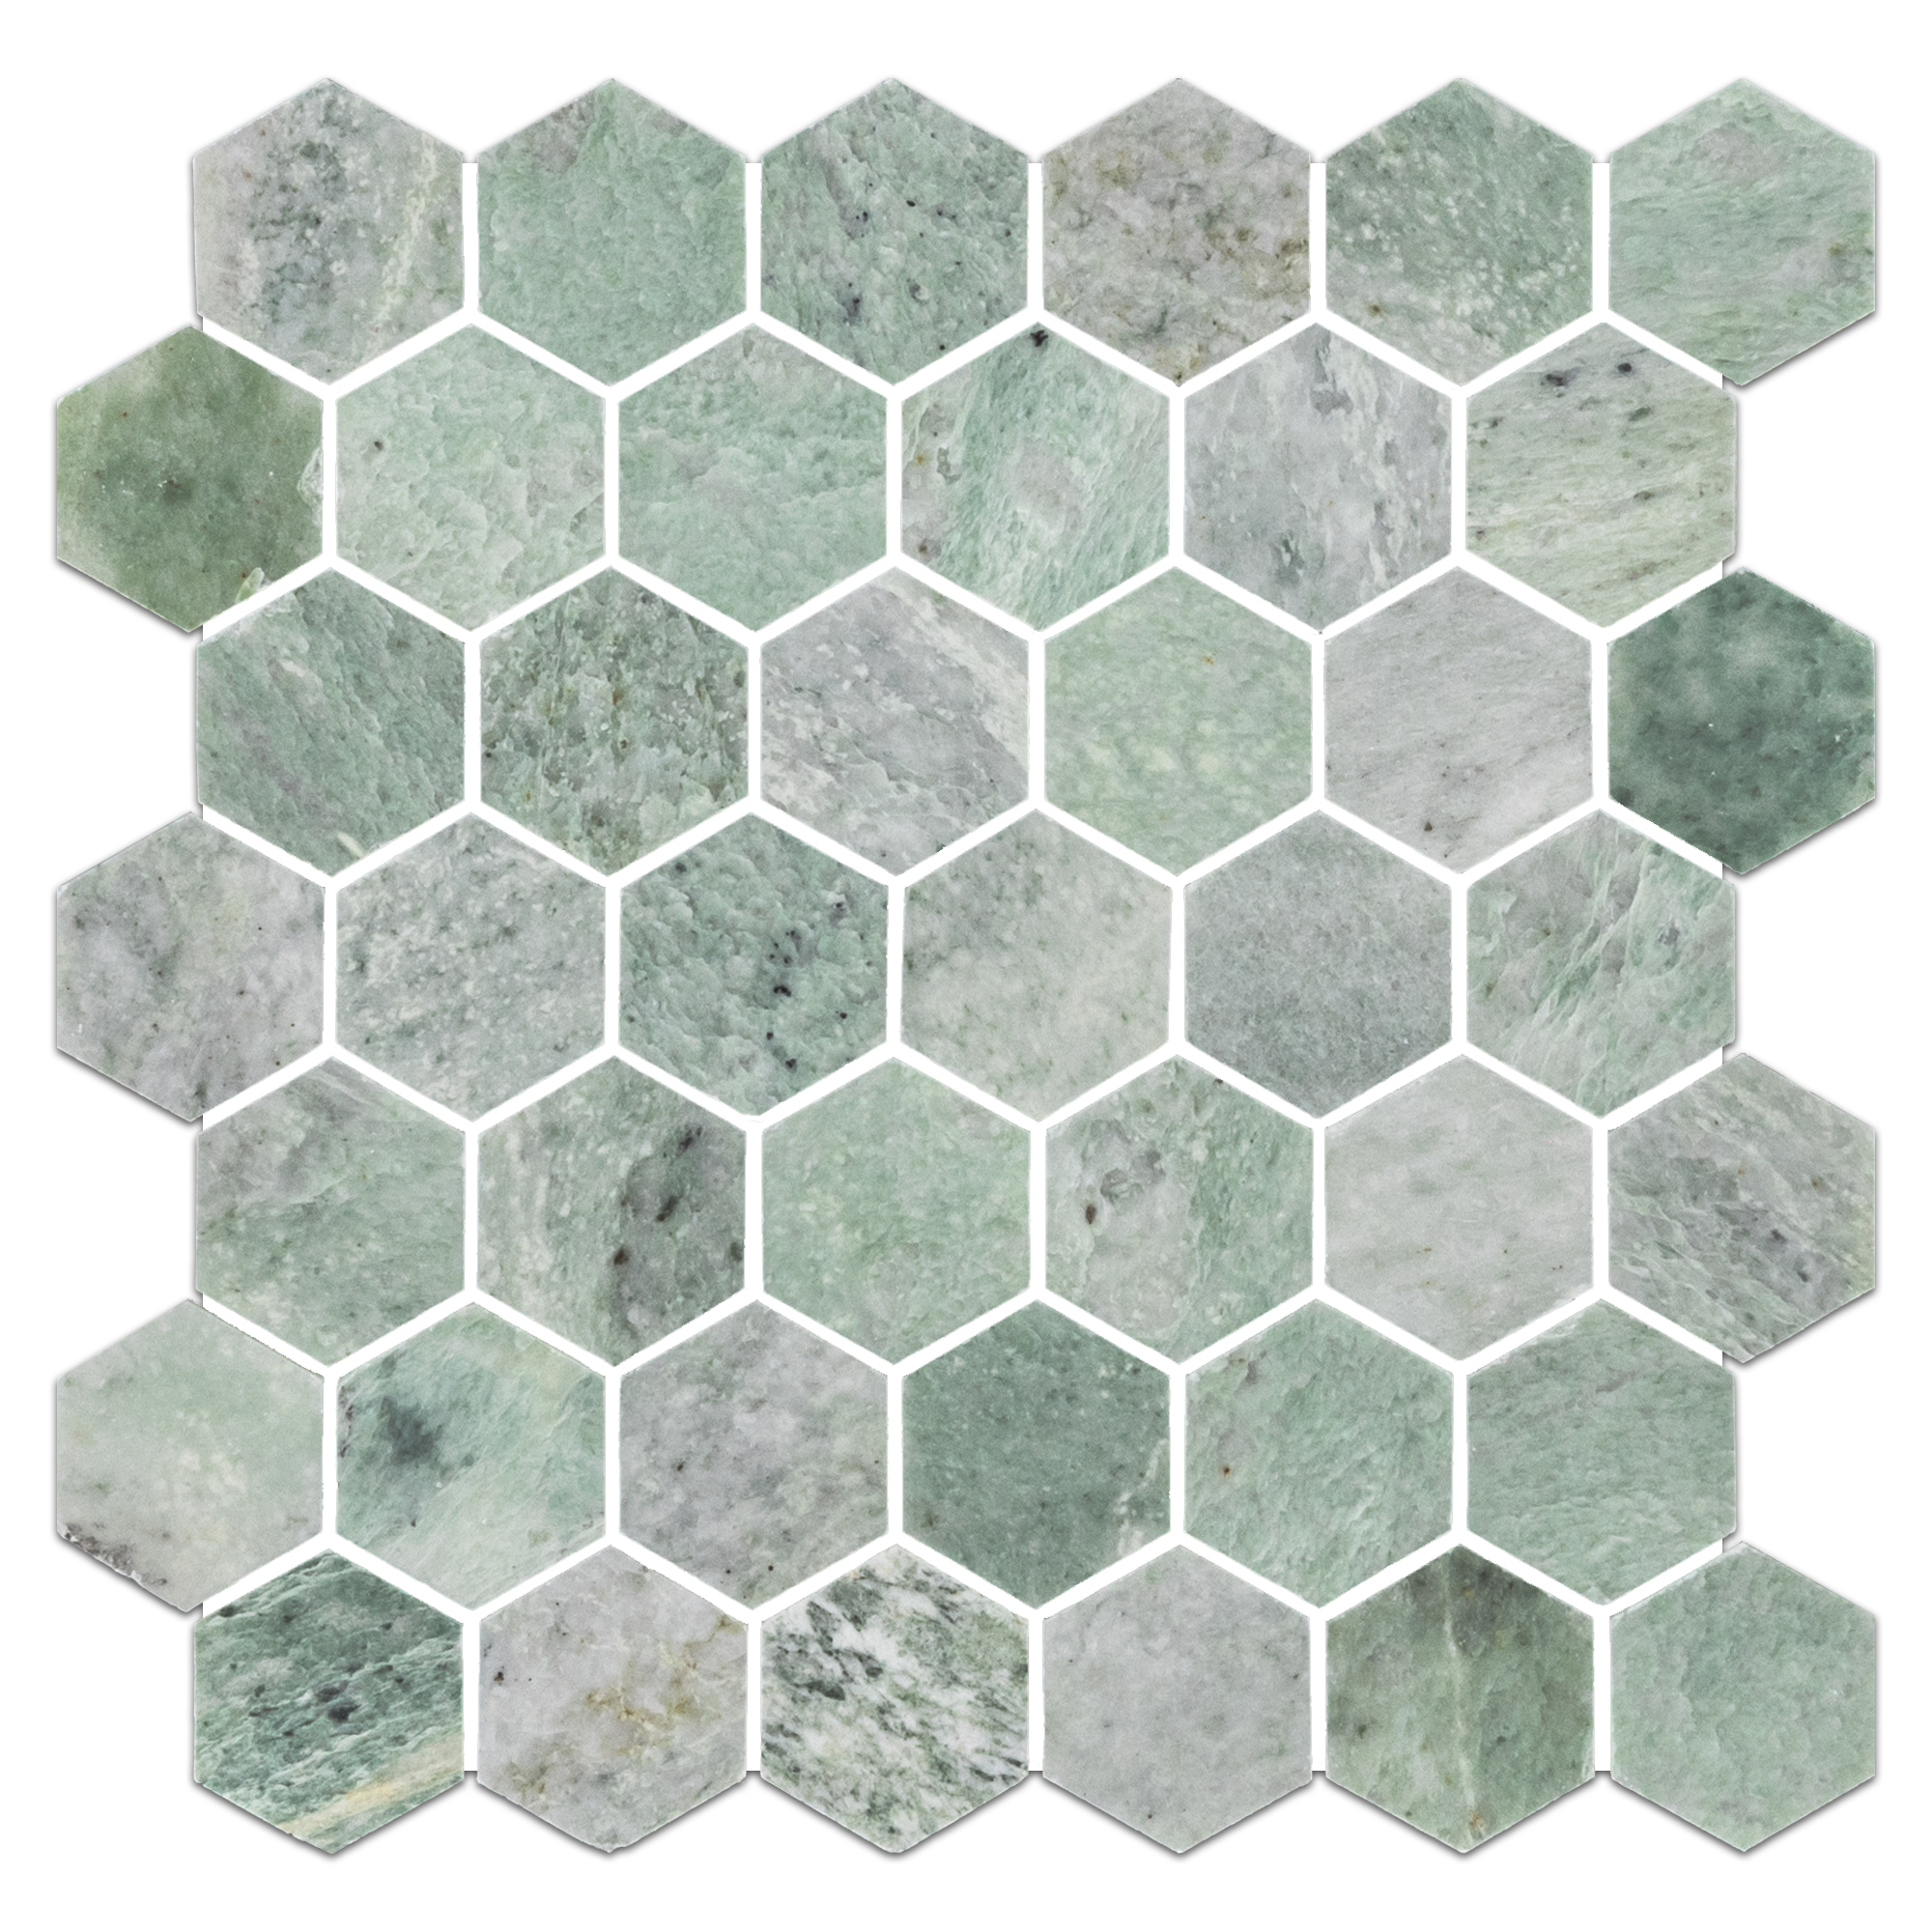 Elon Ming Green Marble 2 Hexagon Field Mosaic 11.75x11.9375x0.375 Polished - Surface Group International Product